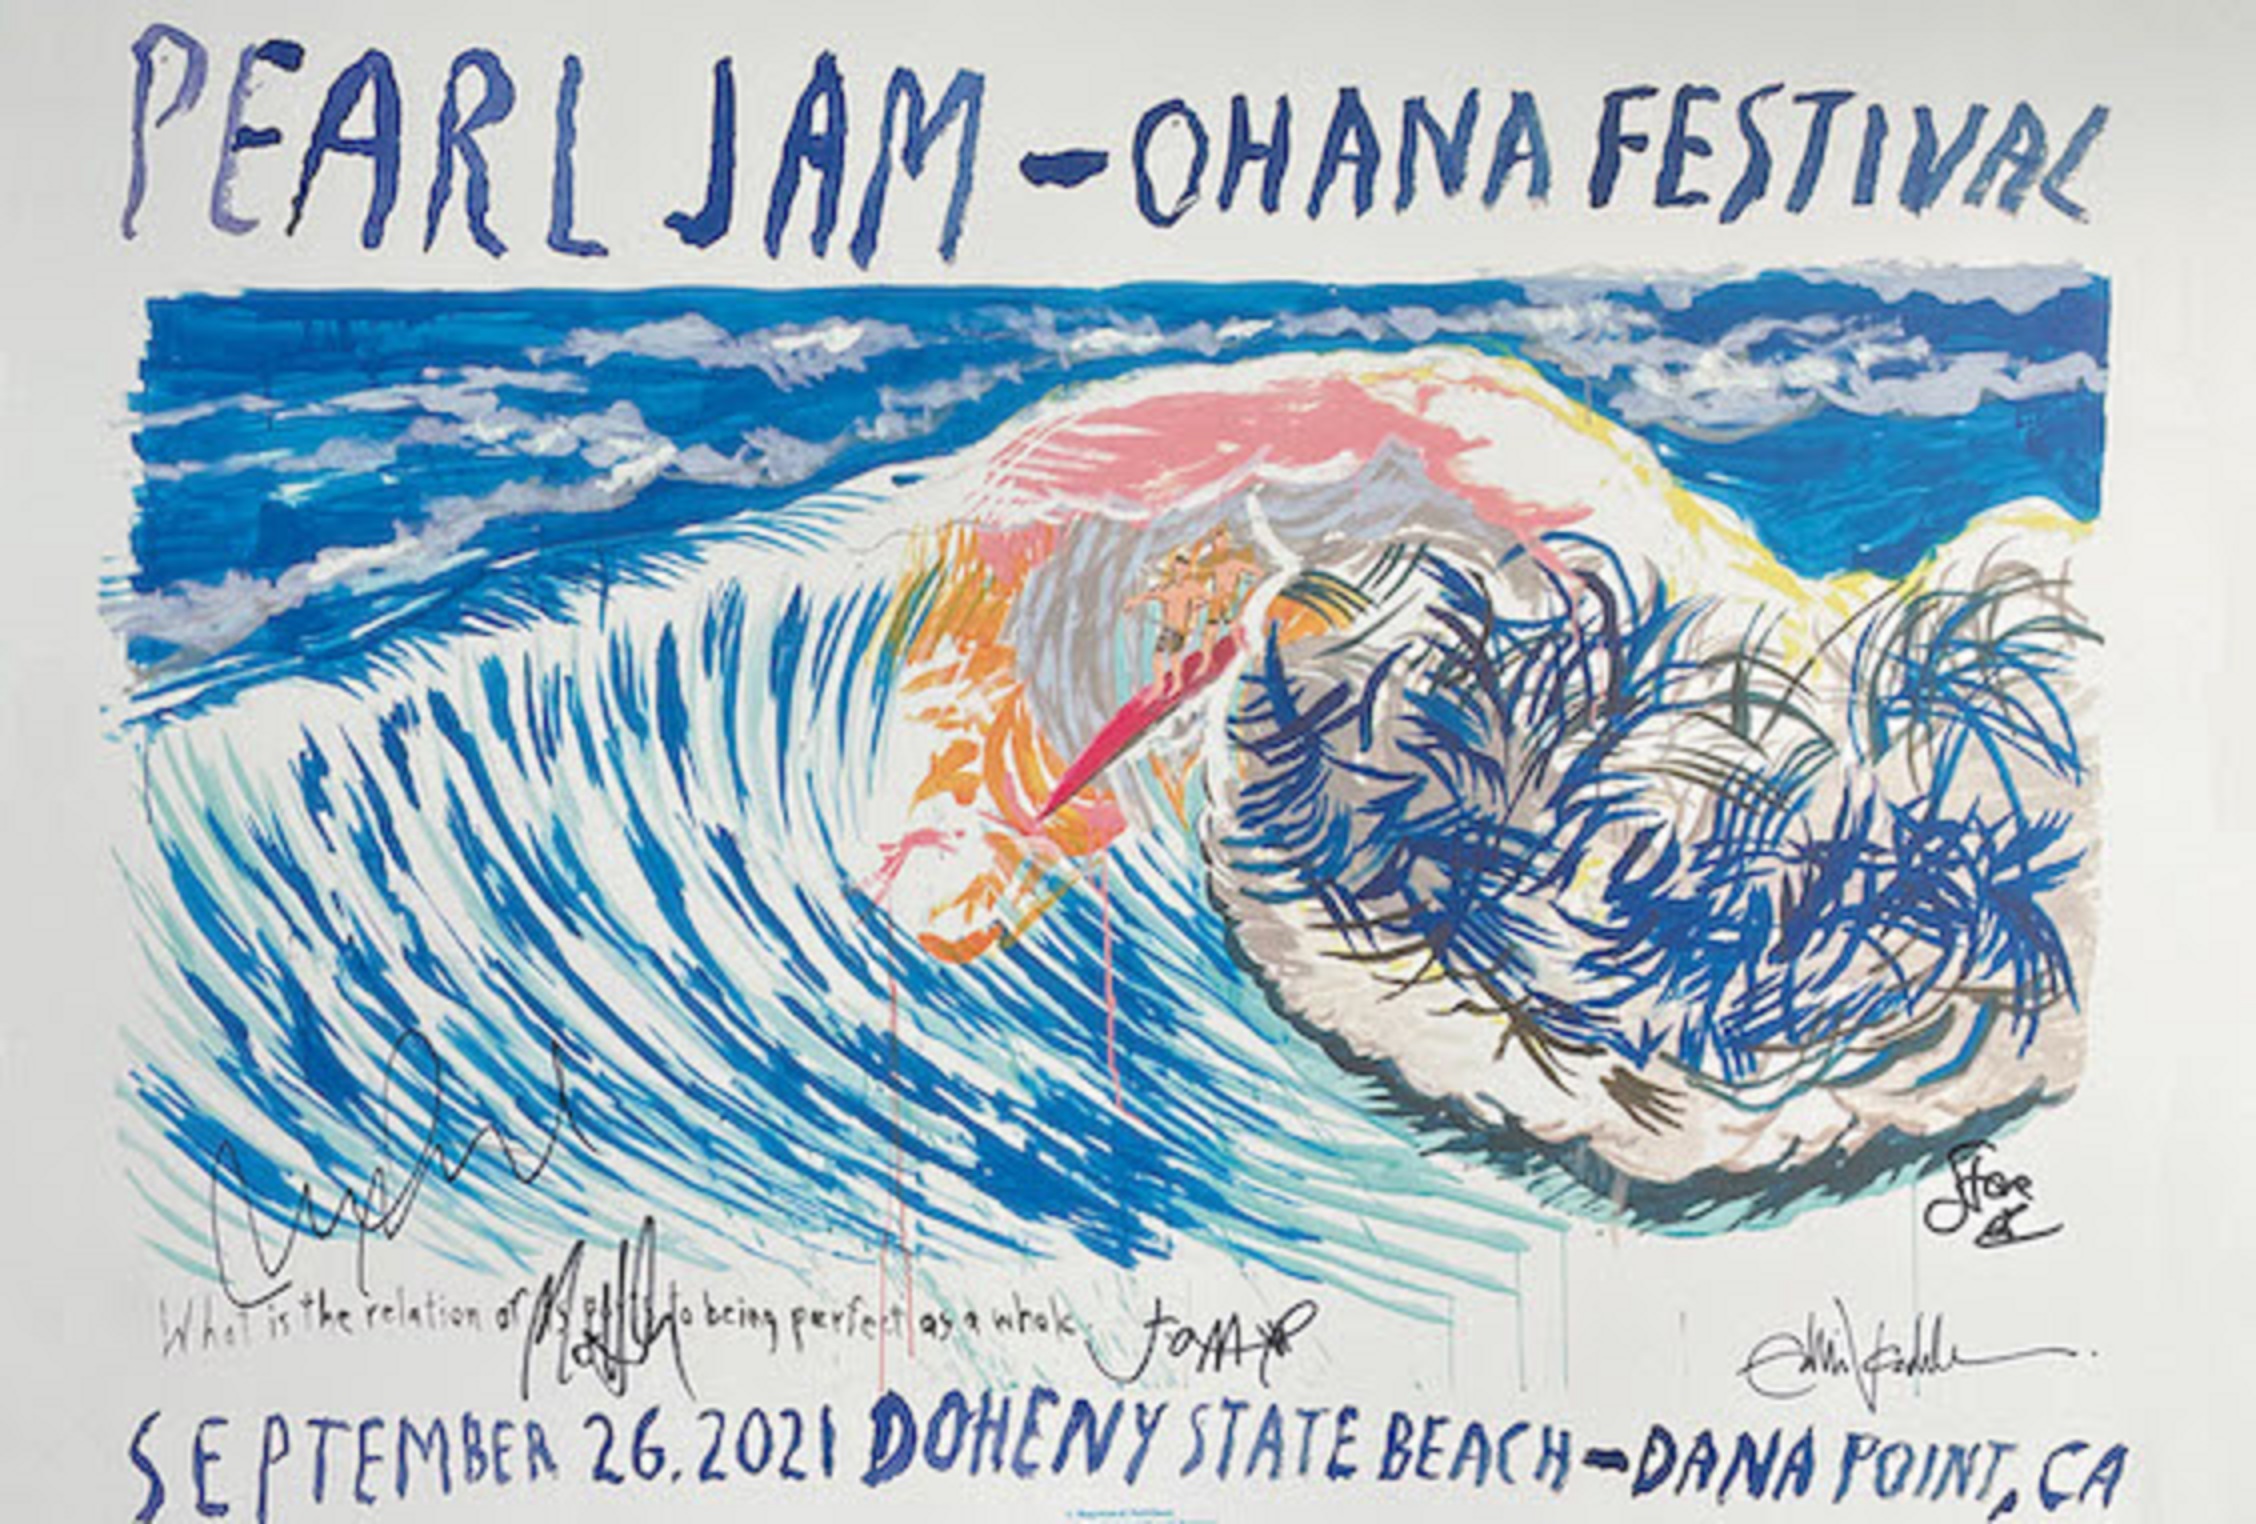 Last Call - Ohana Festival Poster Raffle